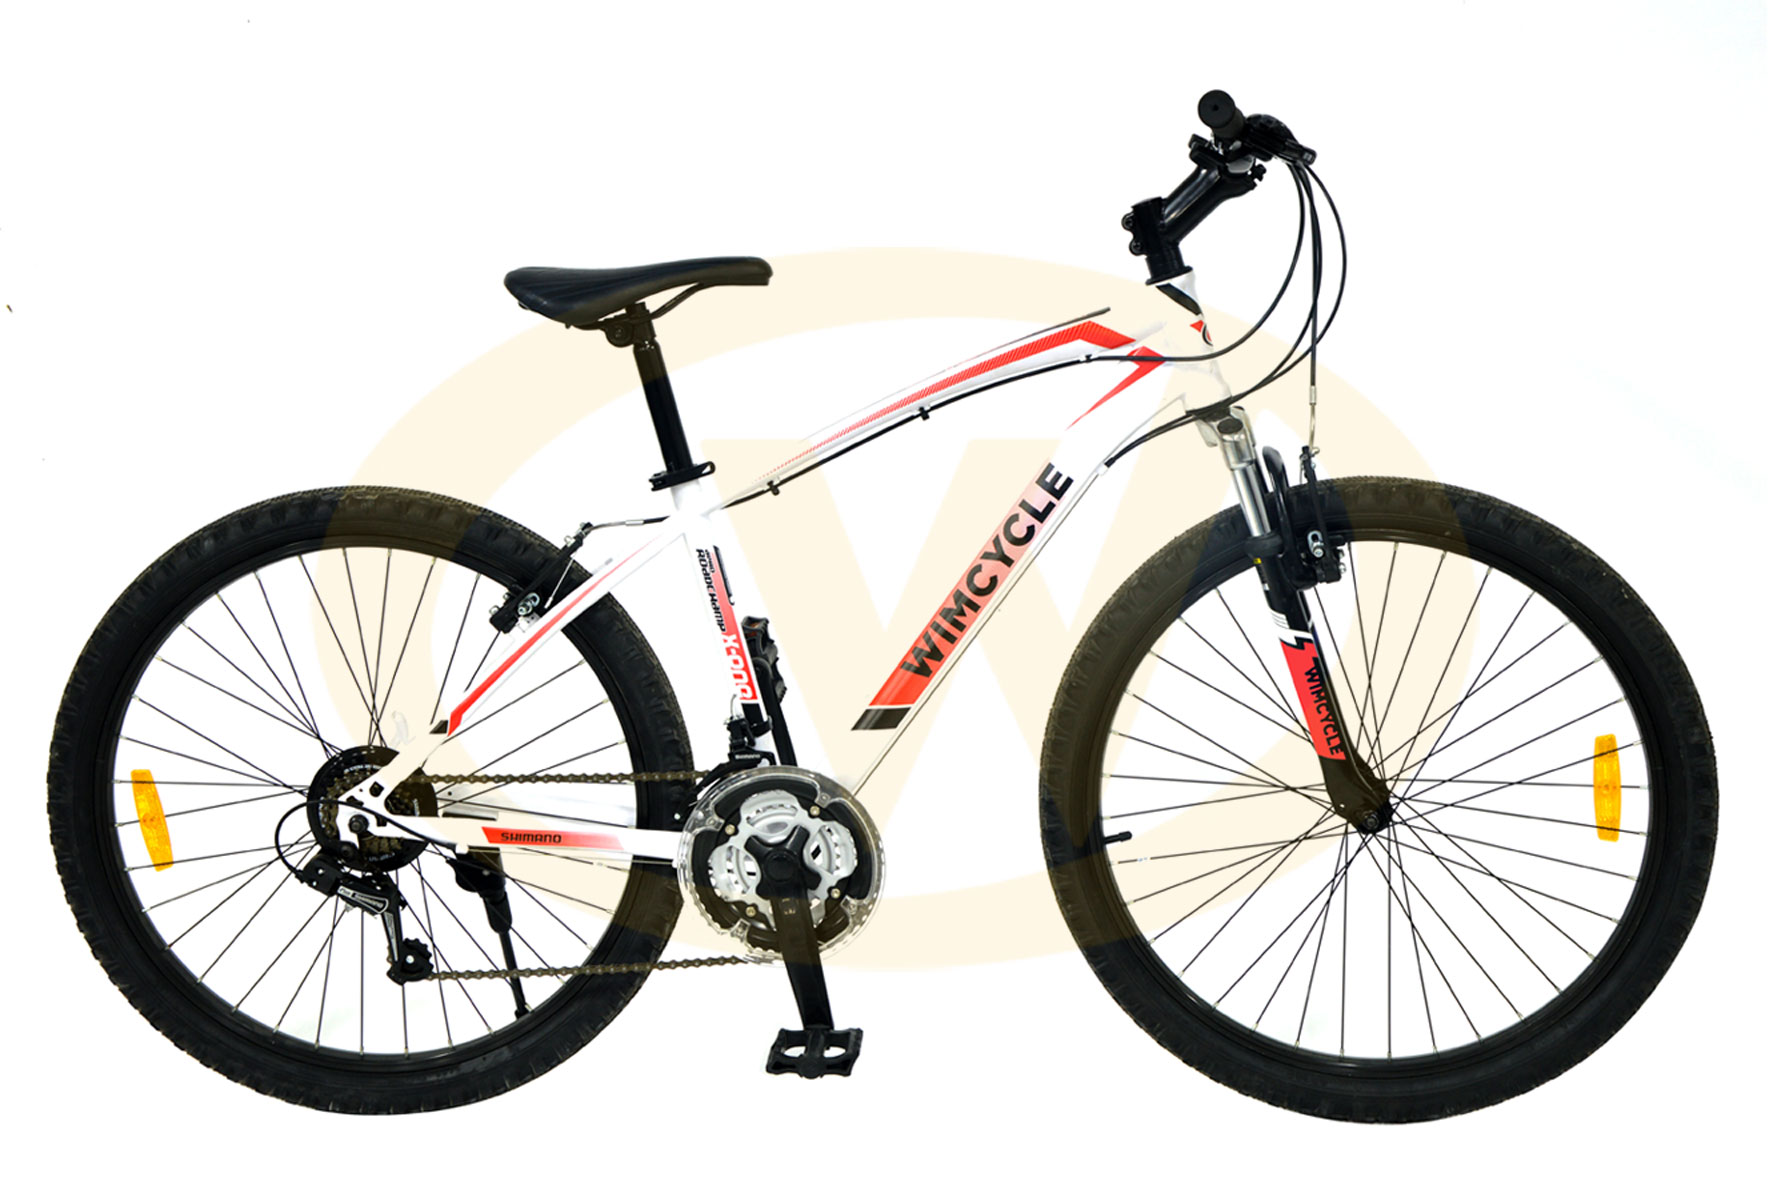 Gebrakan Sepeda  MTB  Wimcycle  2021 Aminoto7 s  Blog